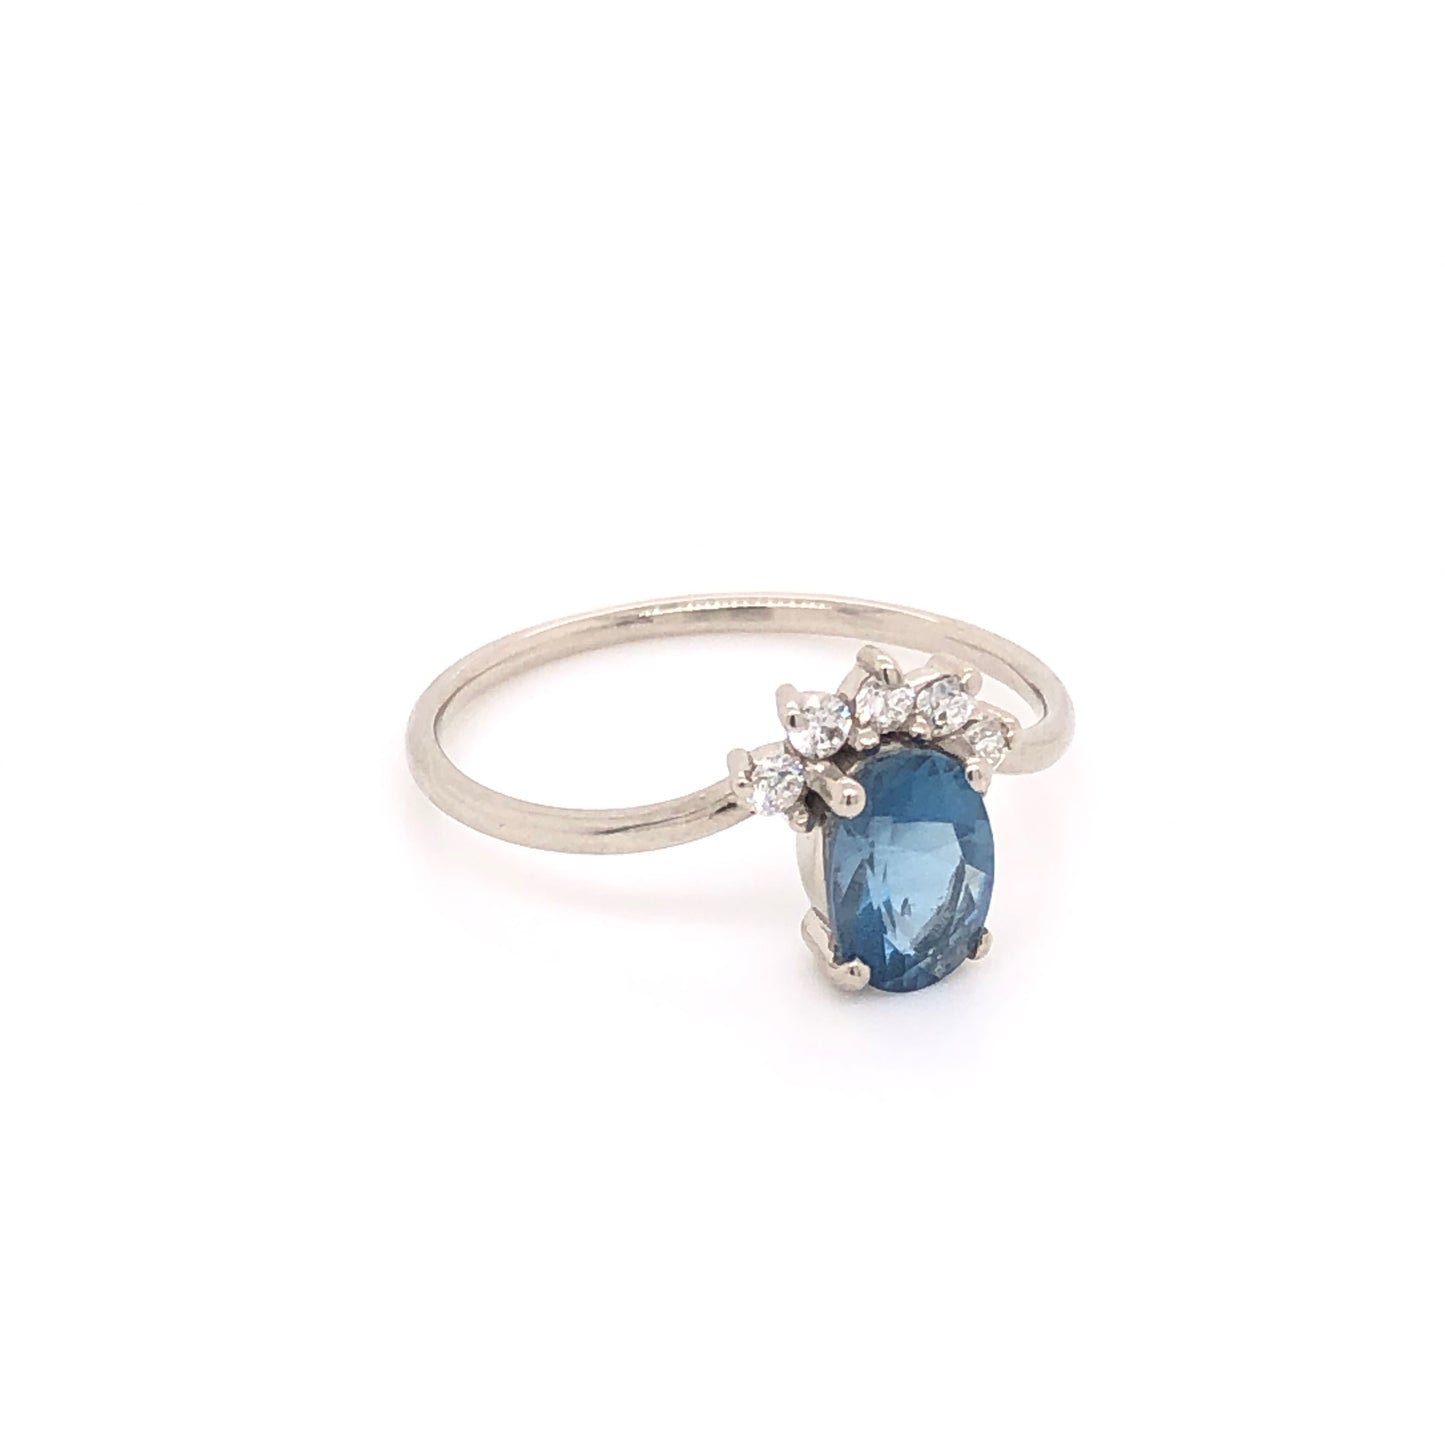 Intense Blue Aquamarine Ring with Diamond Crown